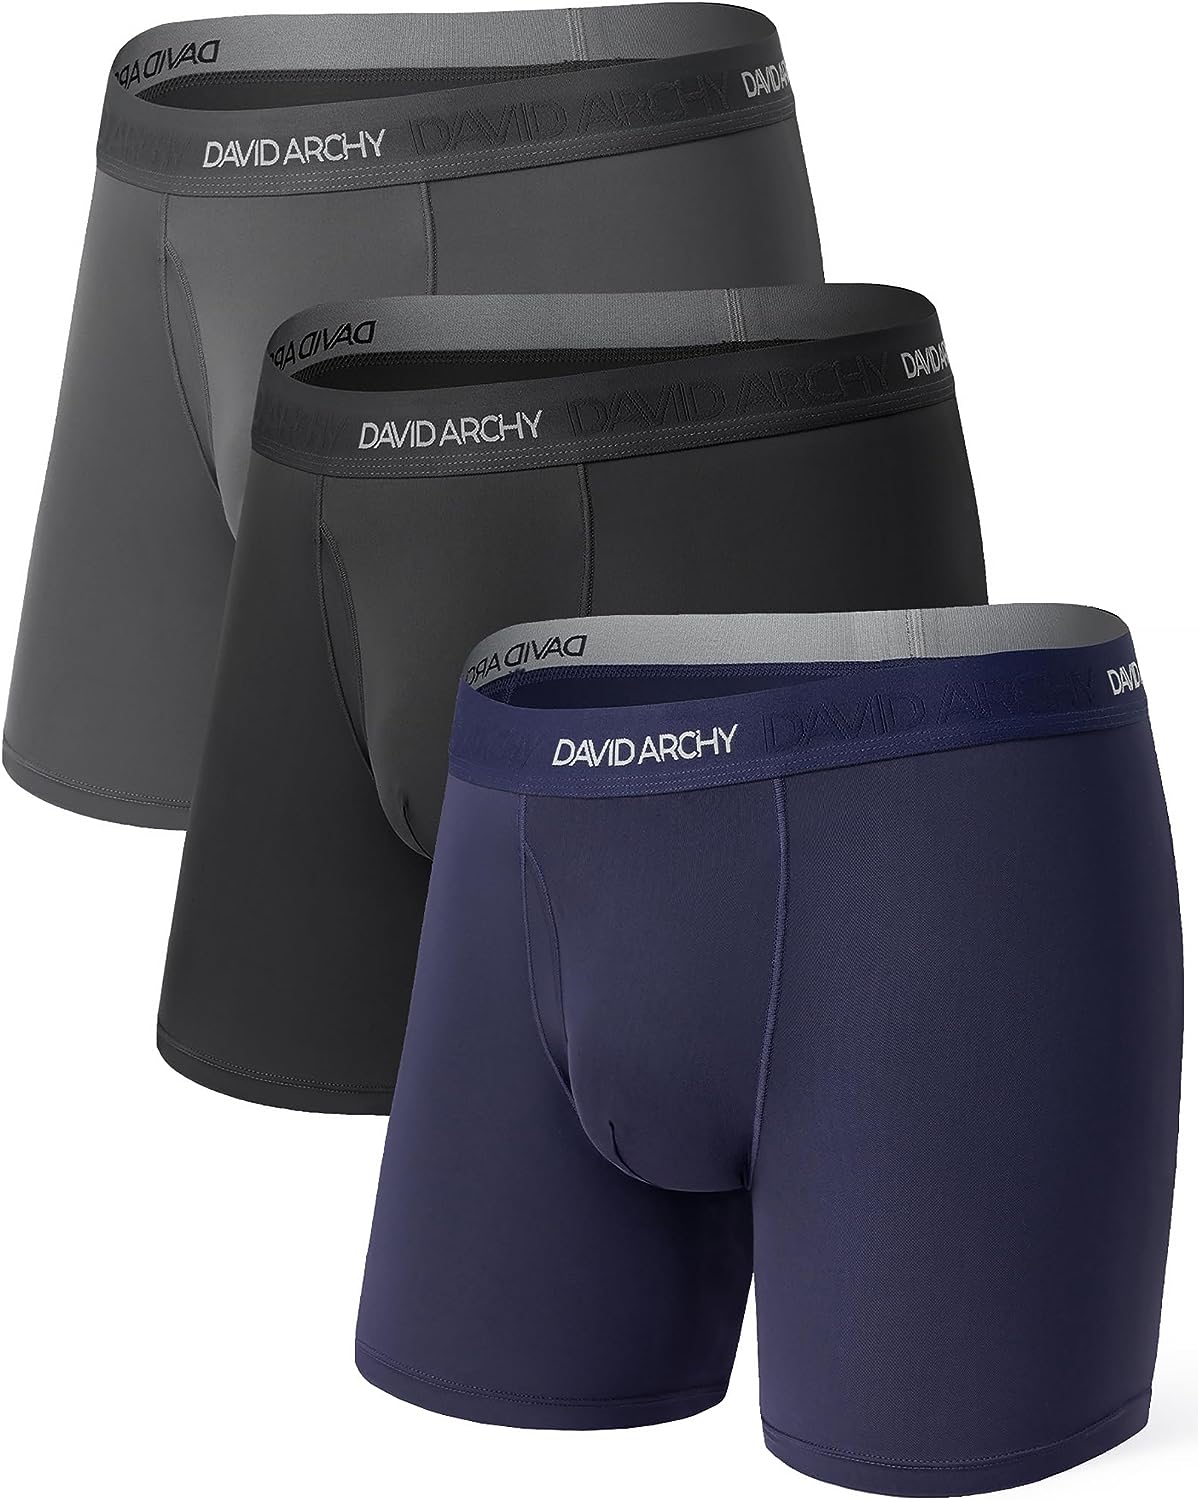  DAVID ARCHY Cotton Mens Underwear Soft Breathable